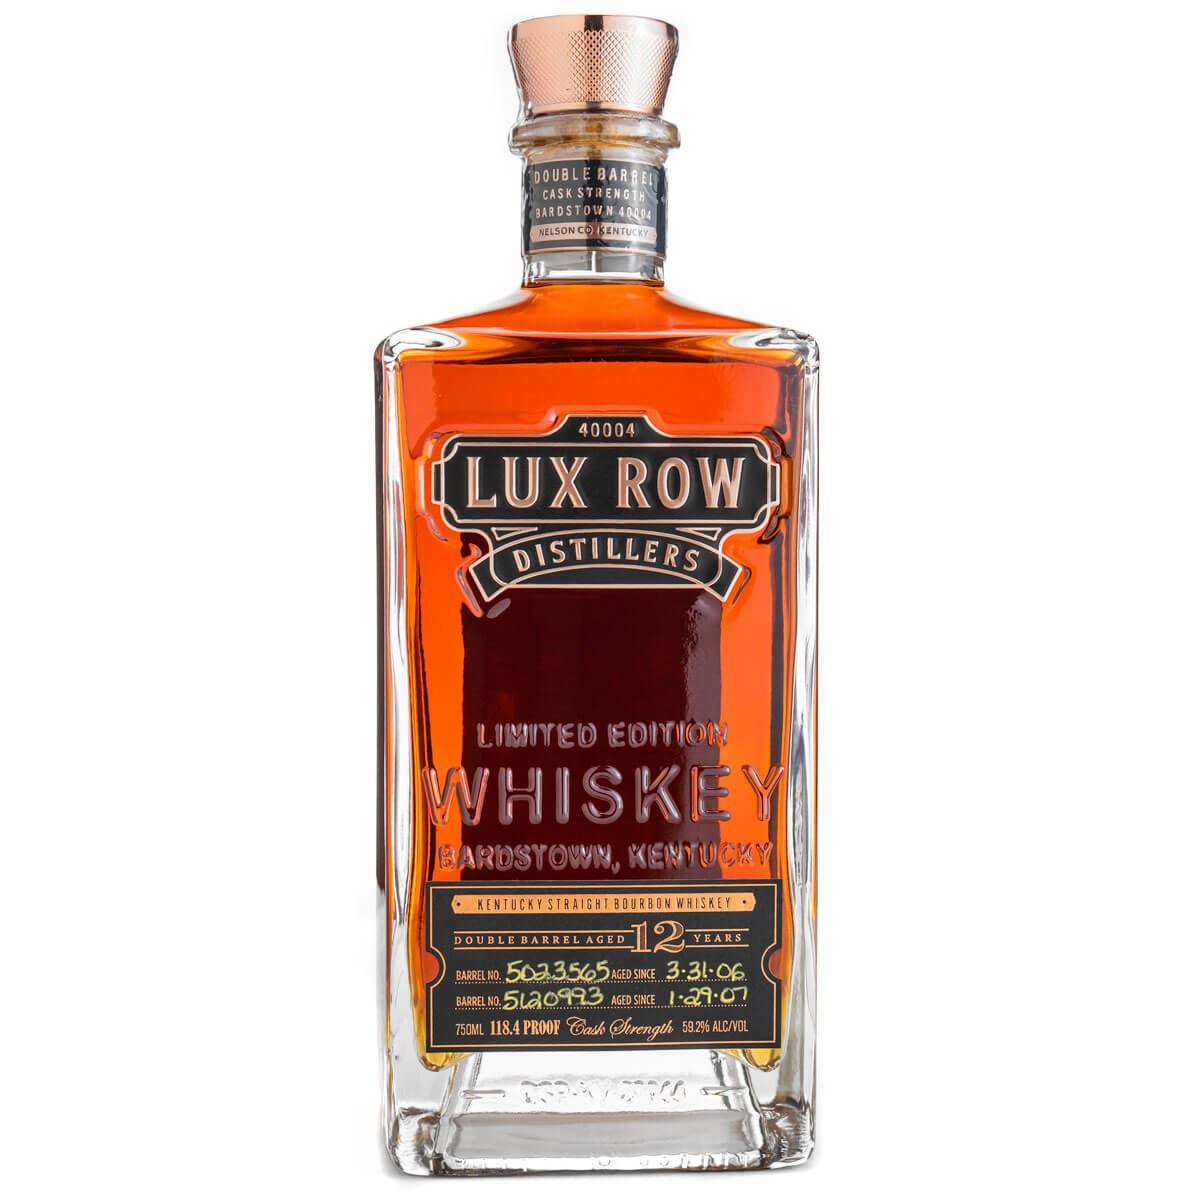 Lux Row Distillers 12 Year Double Barrel Kentucky Straight Bourbon Whiskey bottle